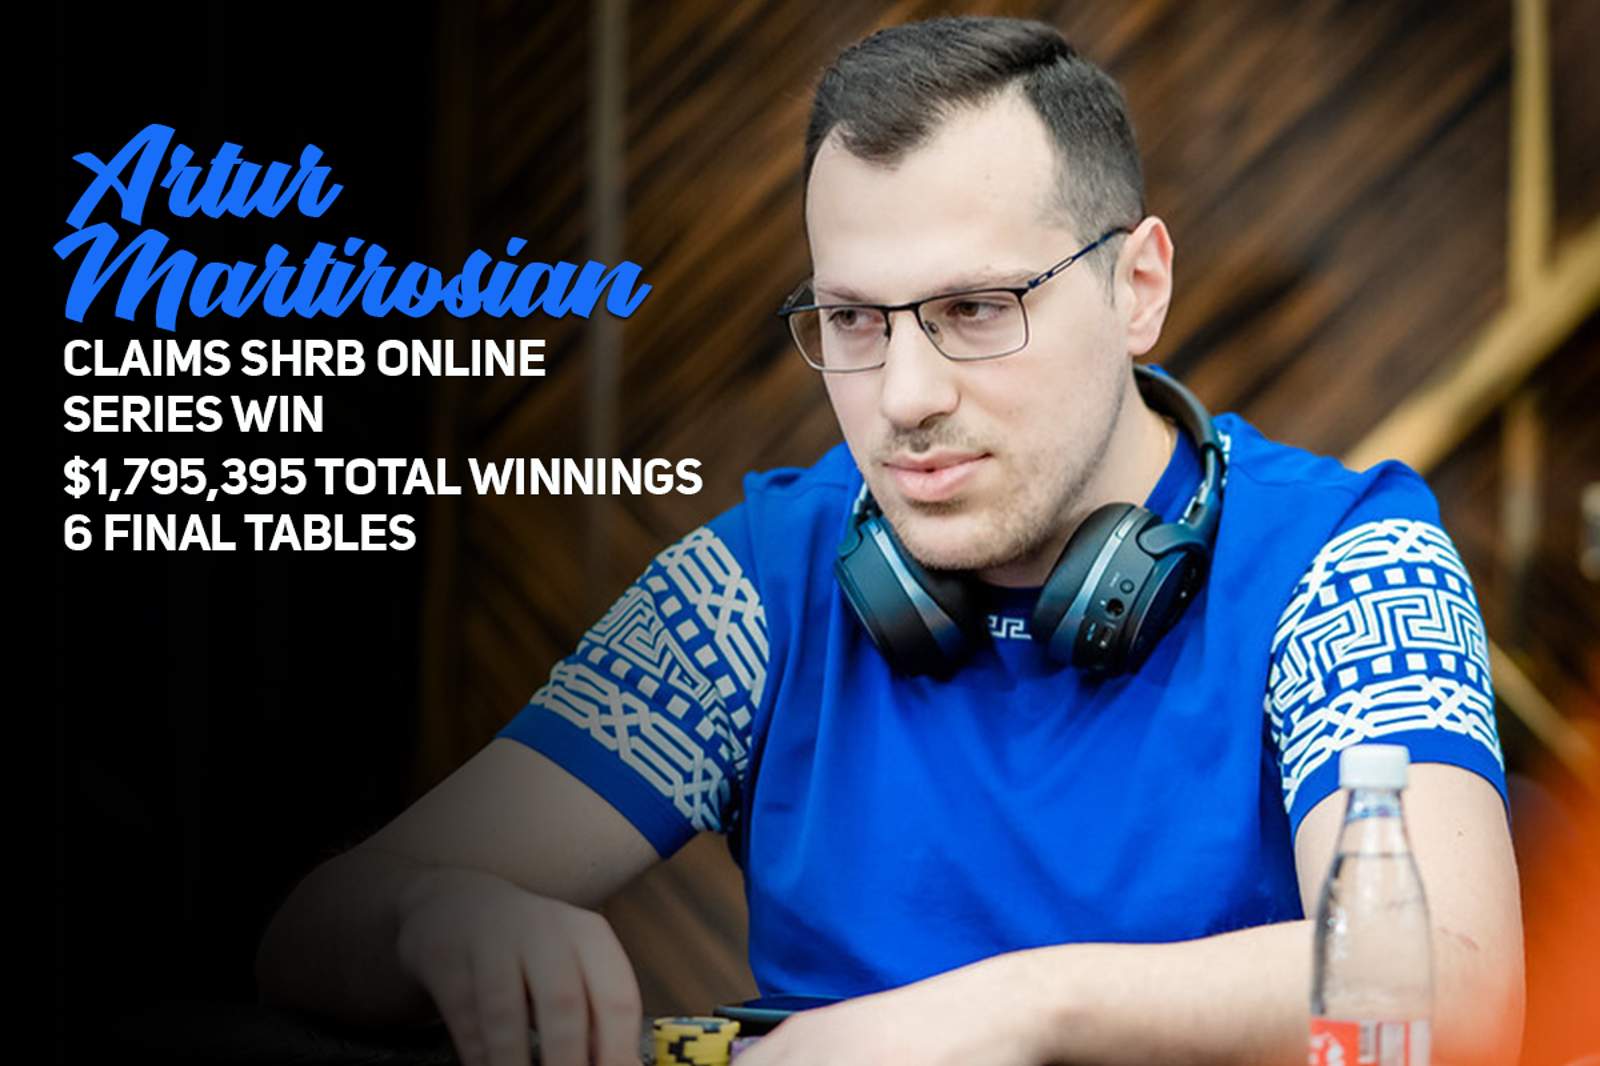 Artur Martirosian Pulls Off Major Upset and Wins SHRB Online Series!